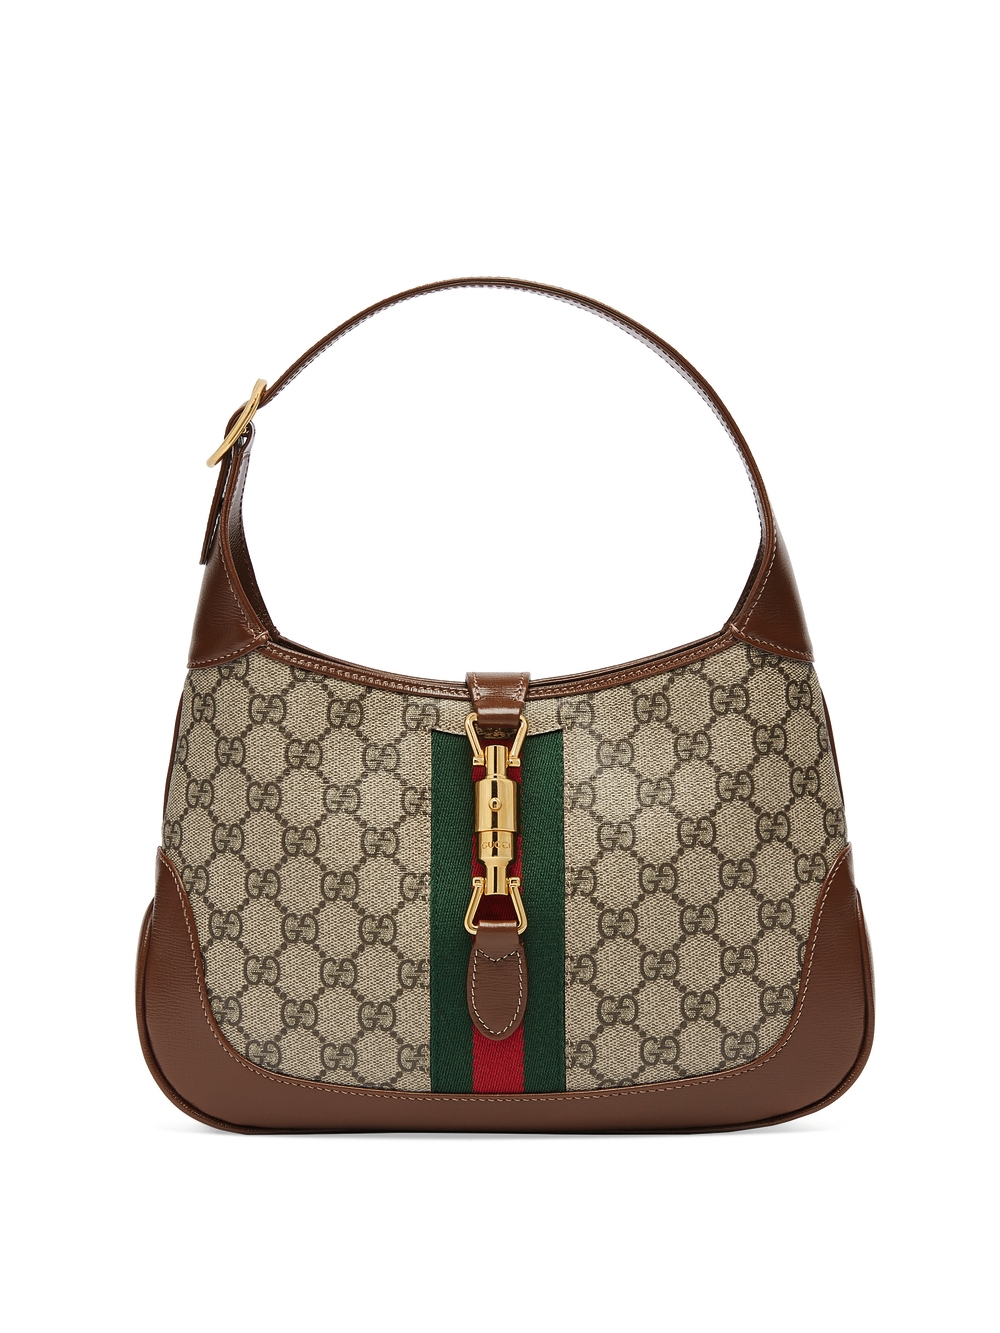 Gucci Jackie Bag - Iconic Purses - Style.com